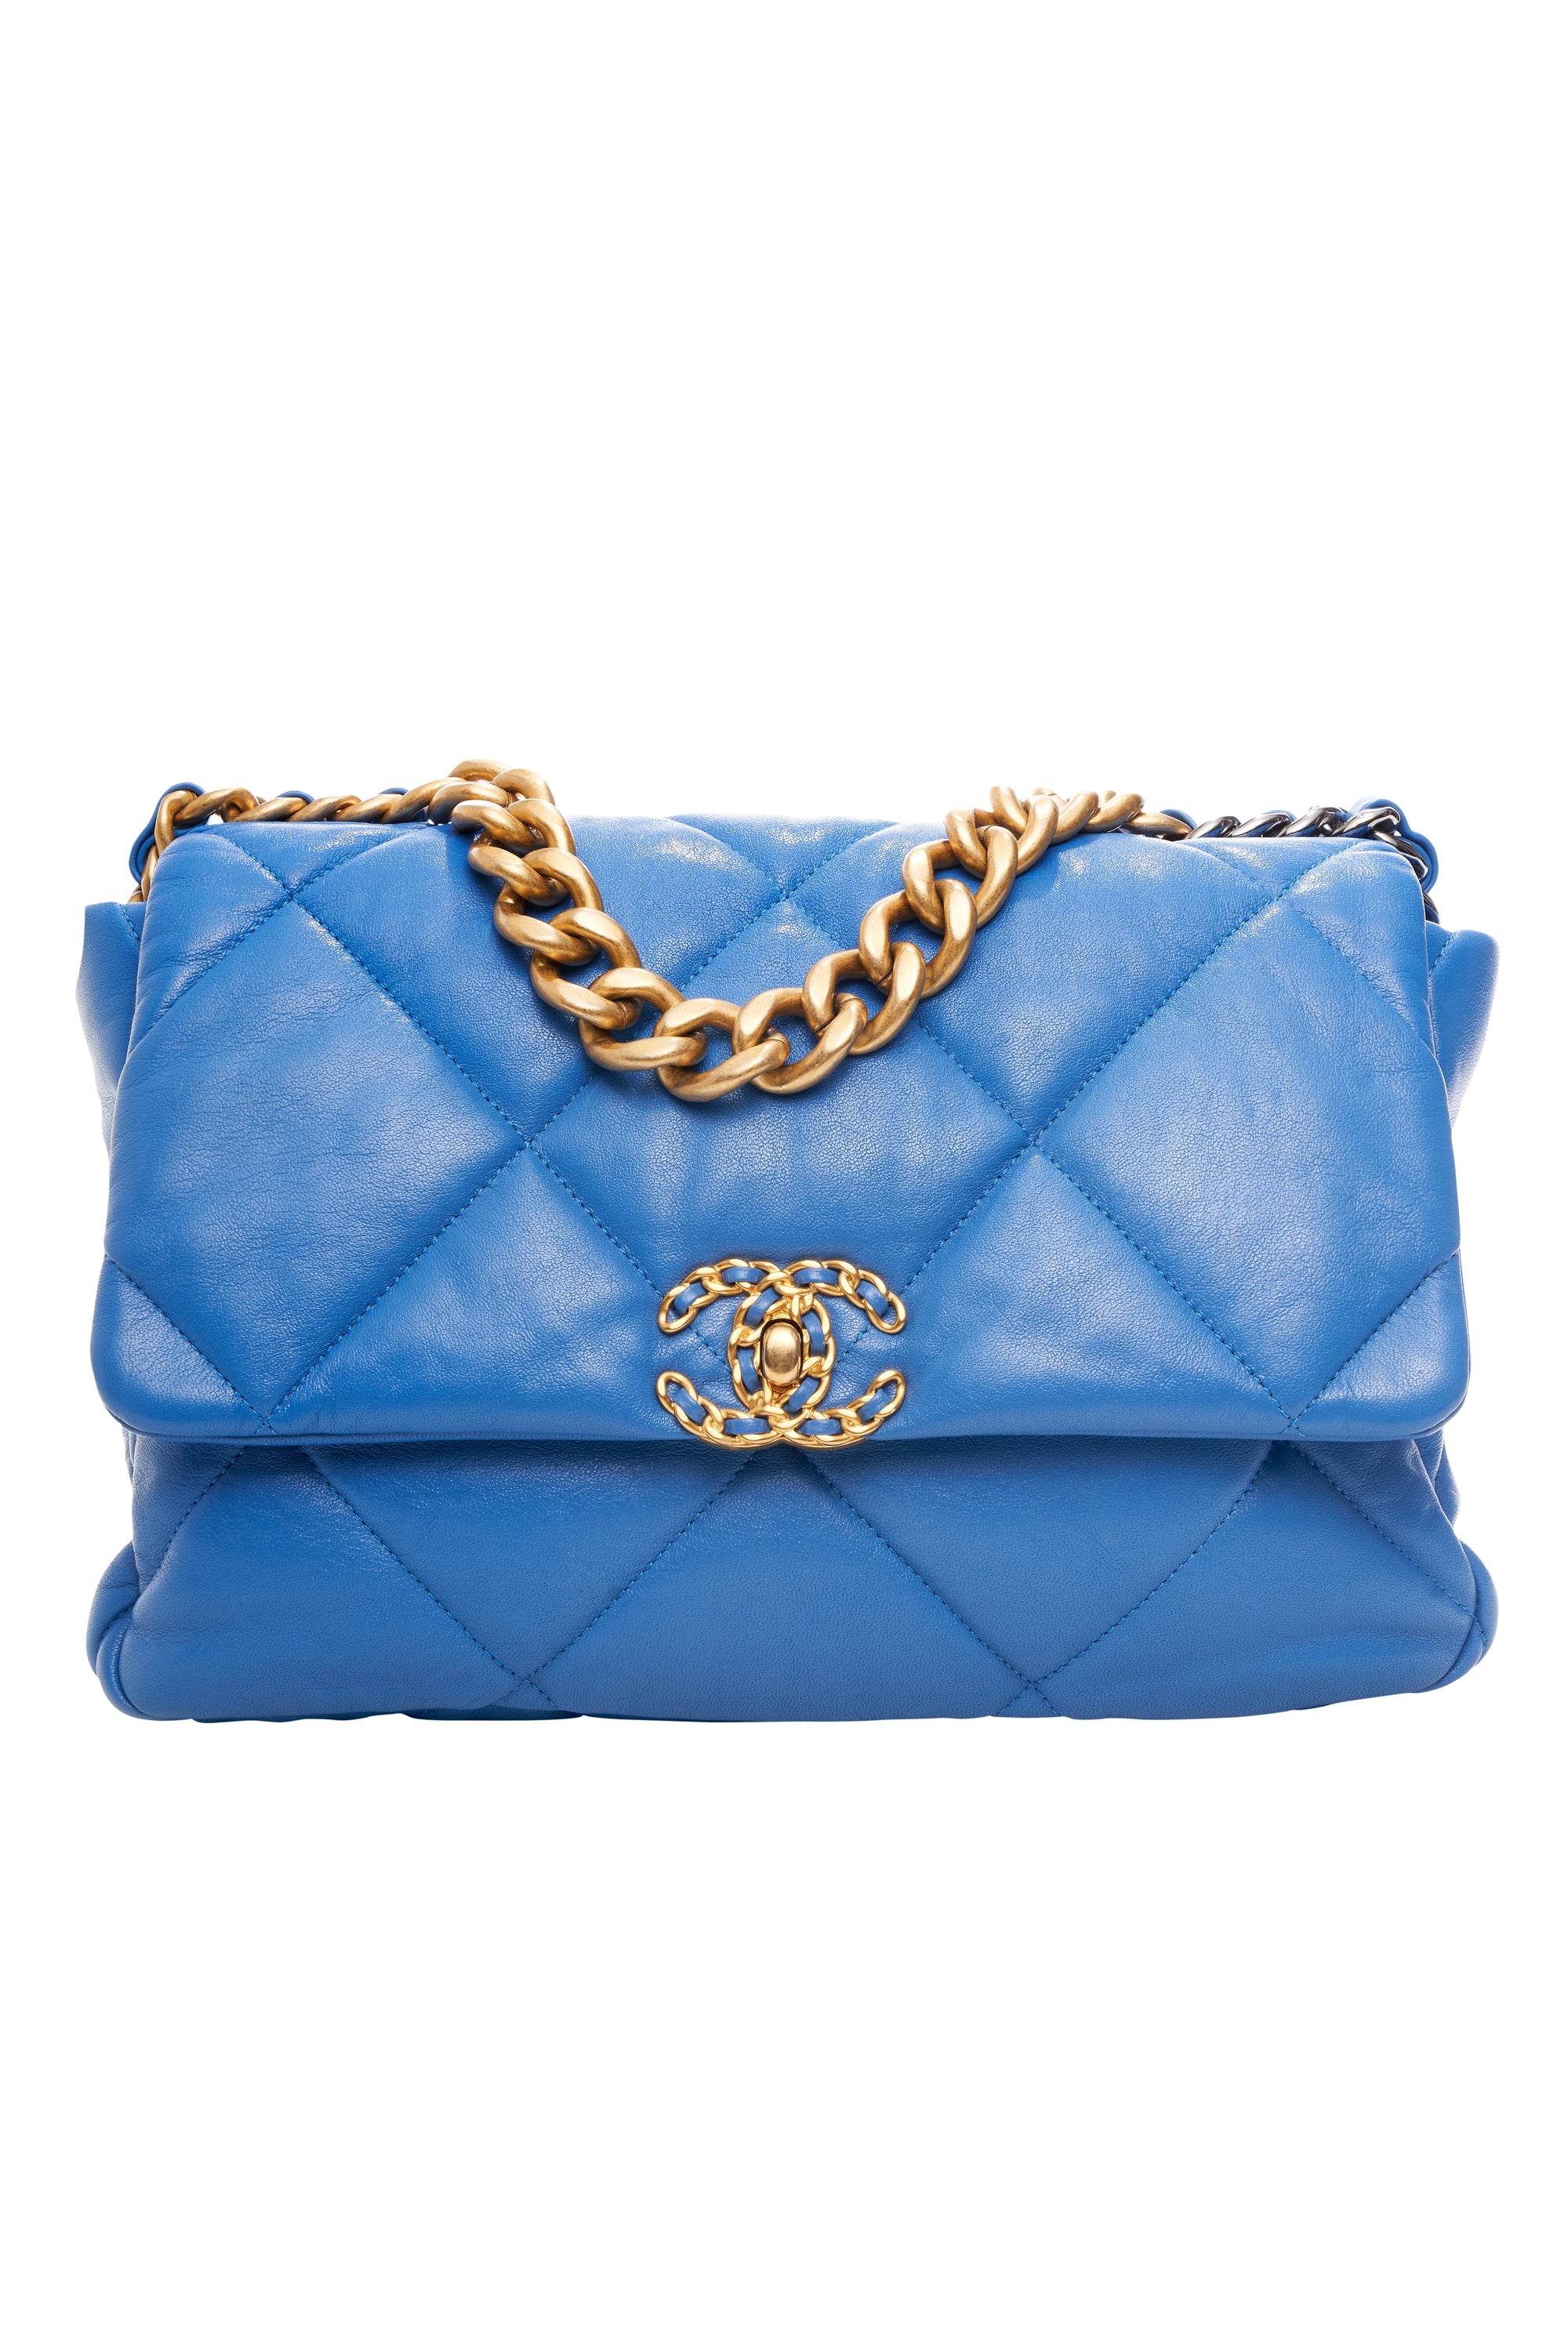 Chanel 19 Medium Blue Purse 2020-21